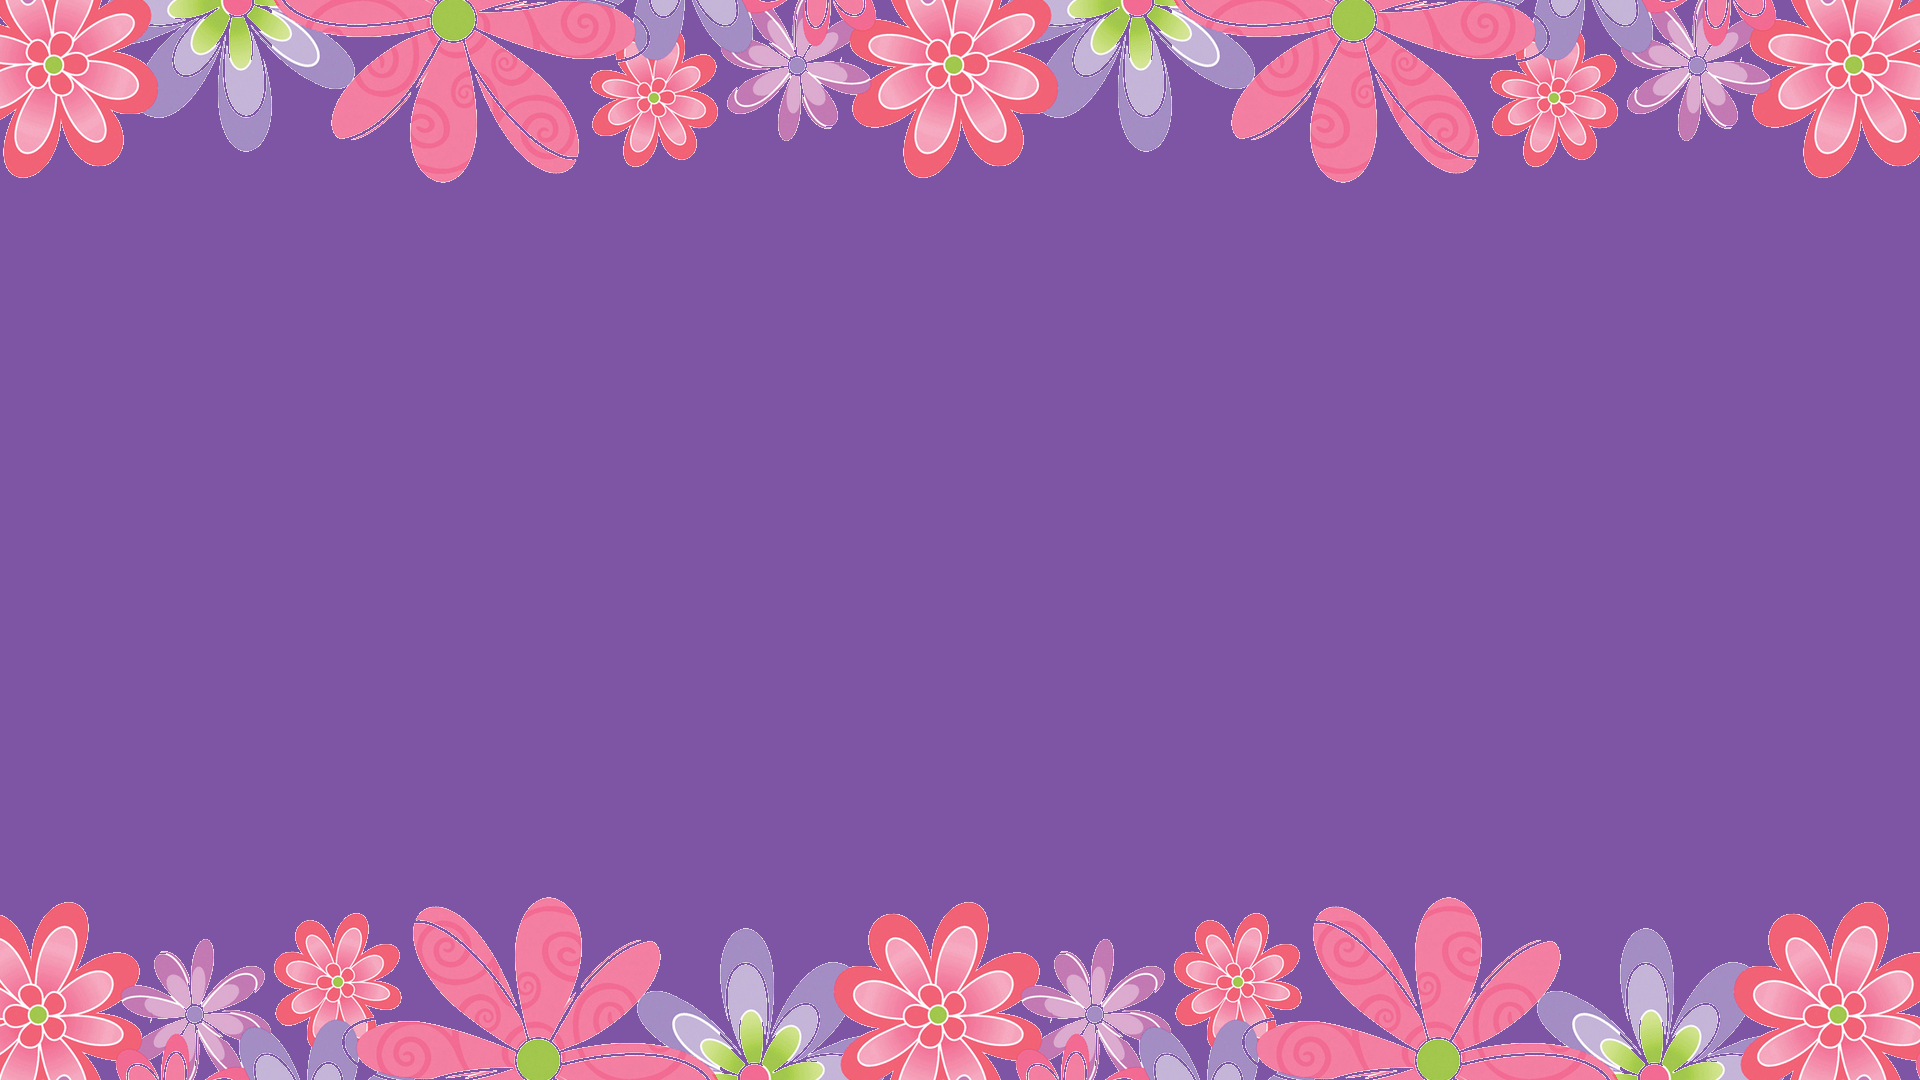 Background design with pink flower frame Vector Image